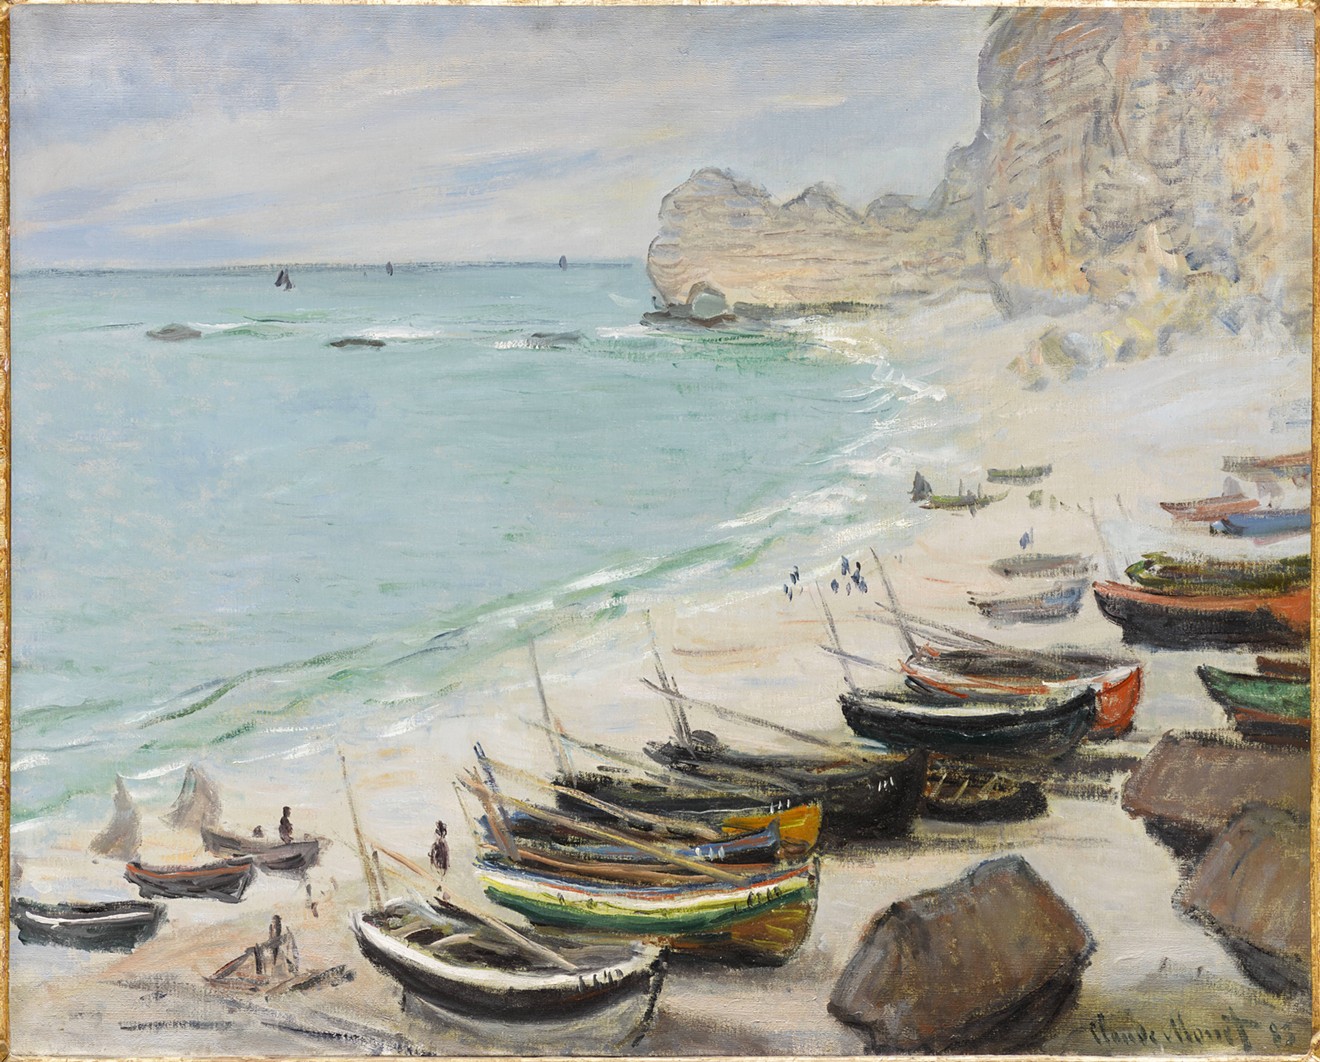 Claude Monet, "Boats on the Beach at Etretat," 1883